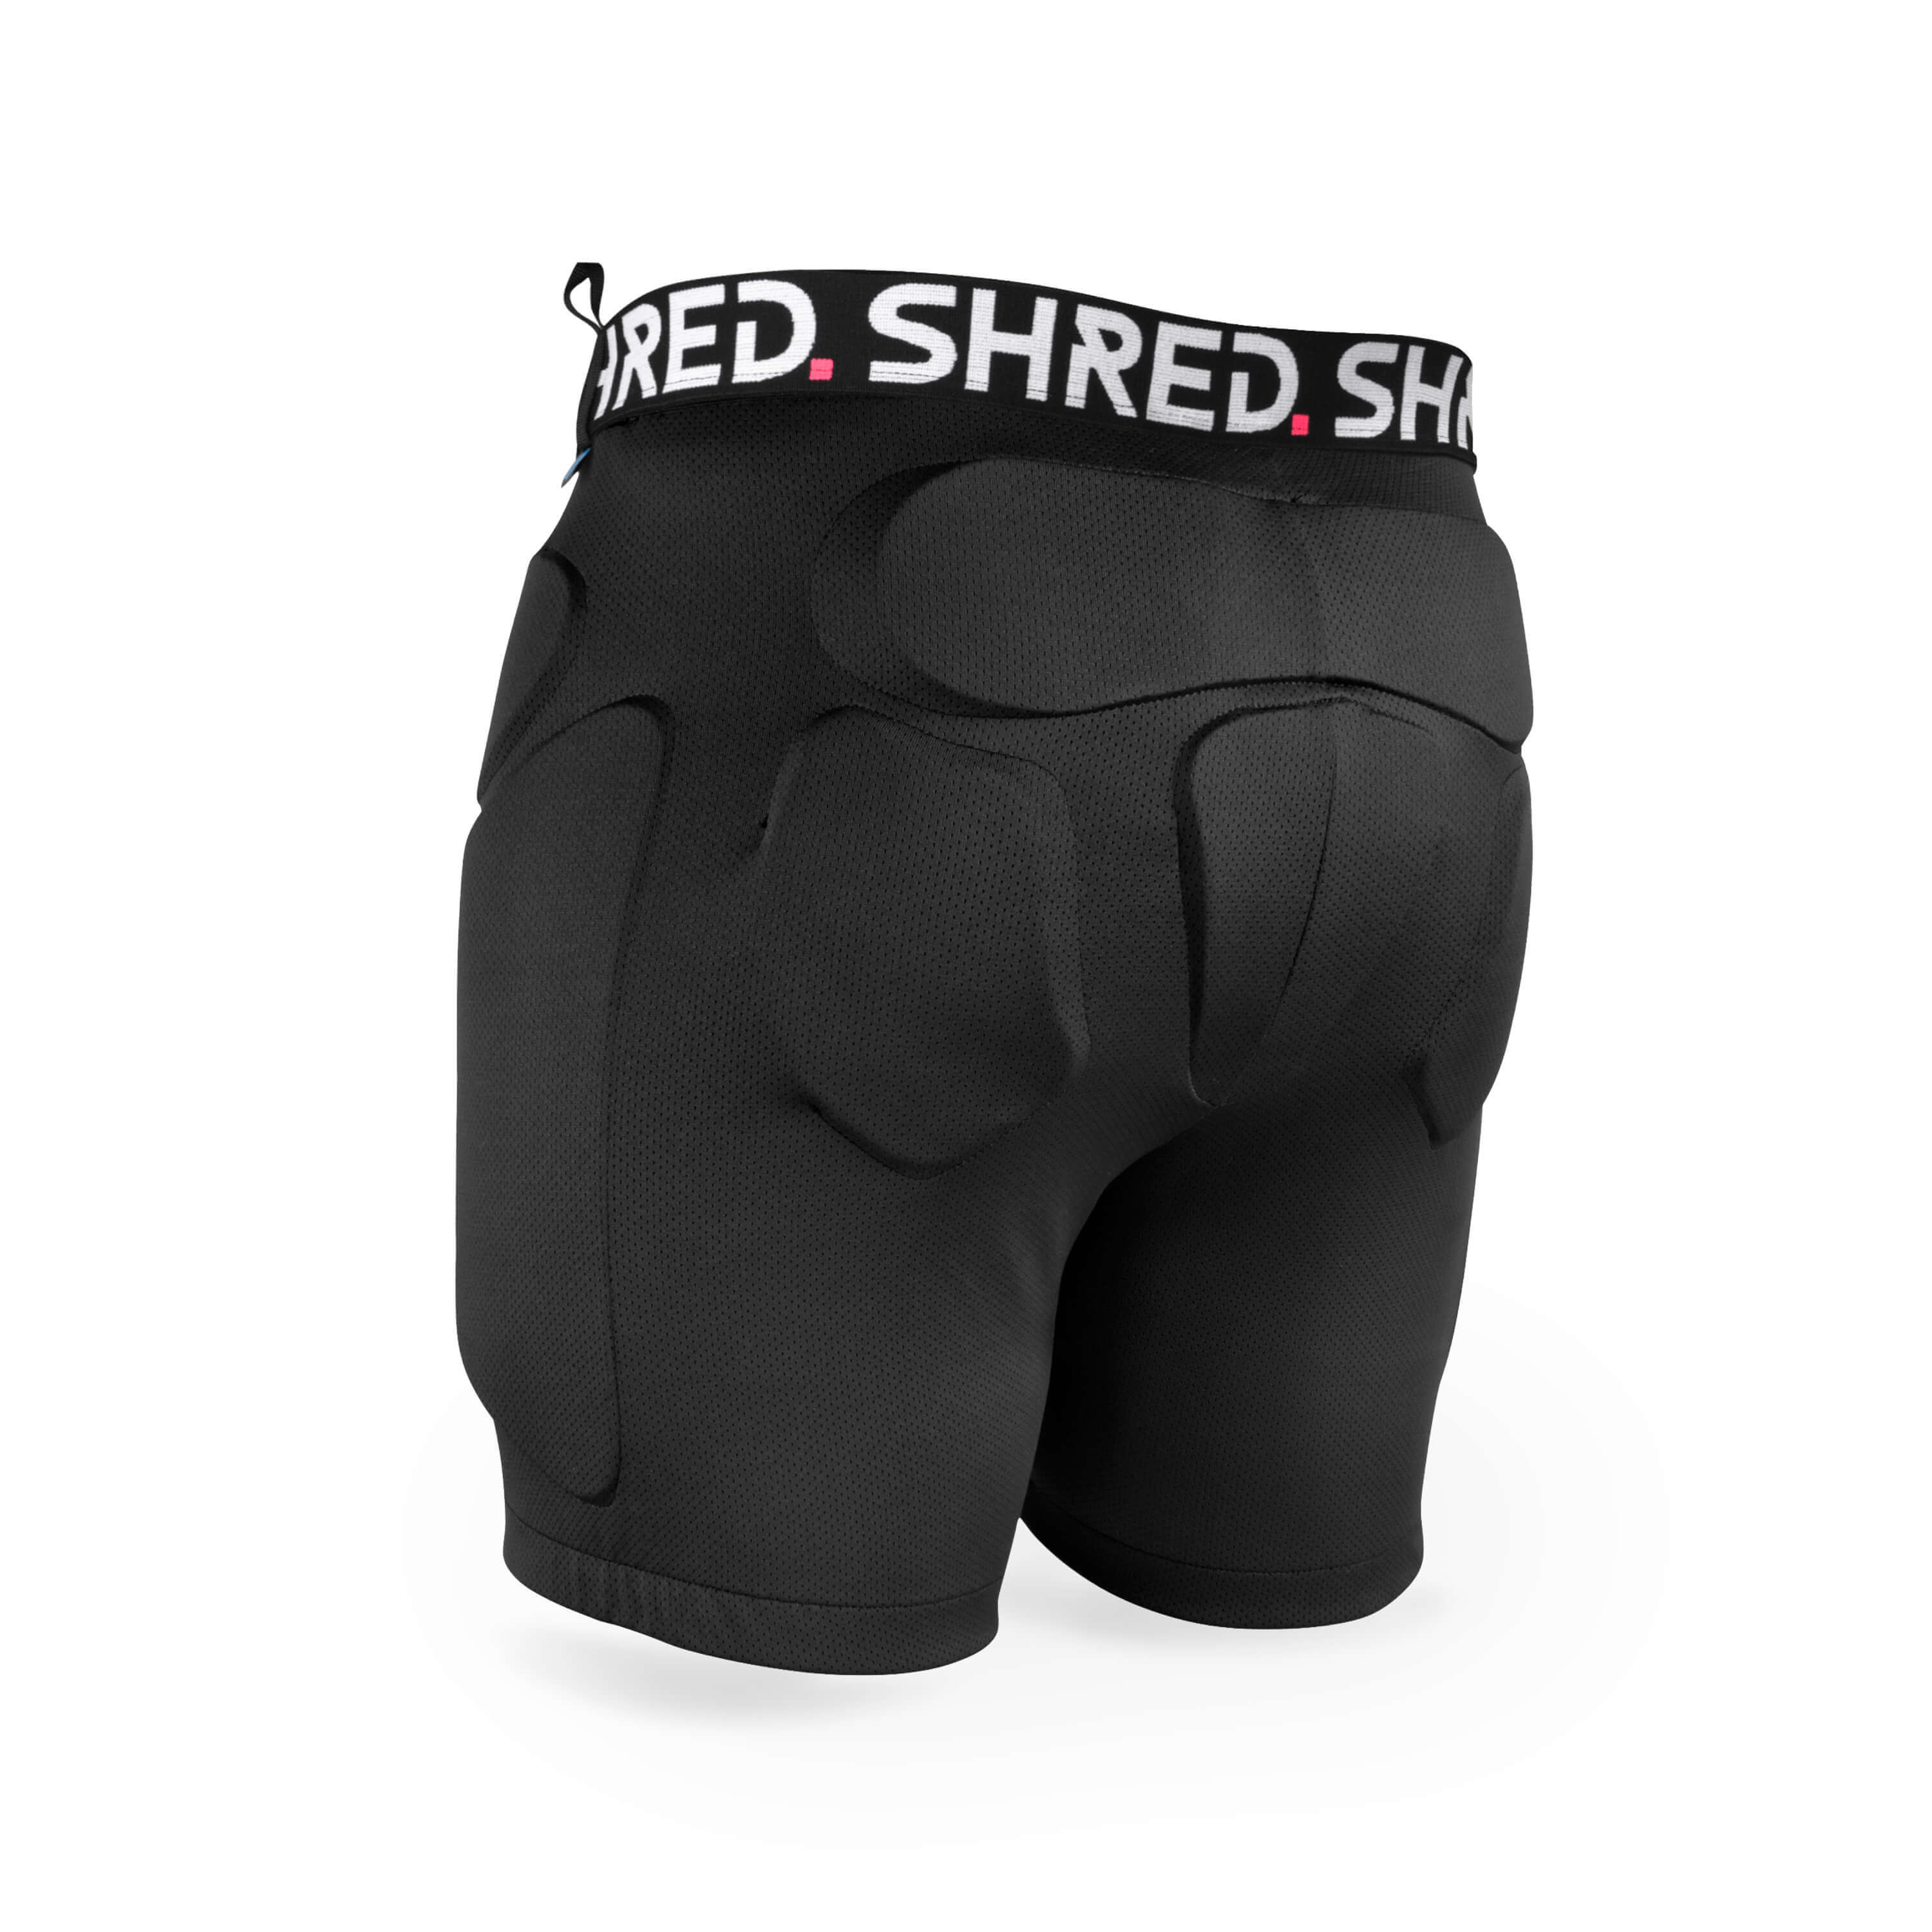 Protective Shorts - Protective Equipment - Shred Canada